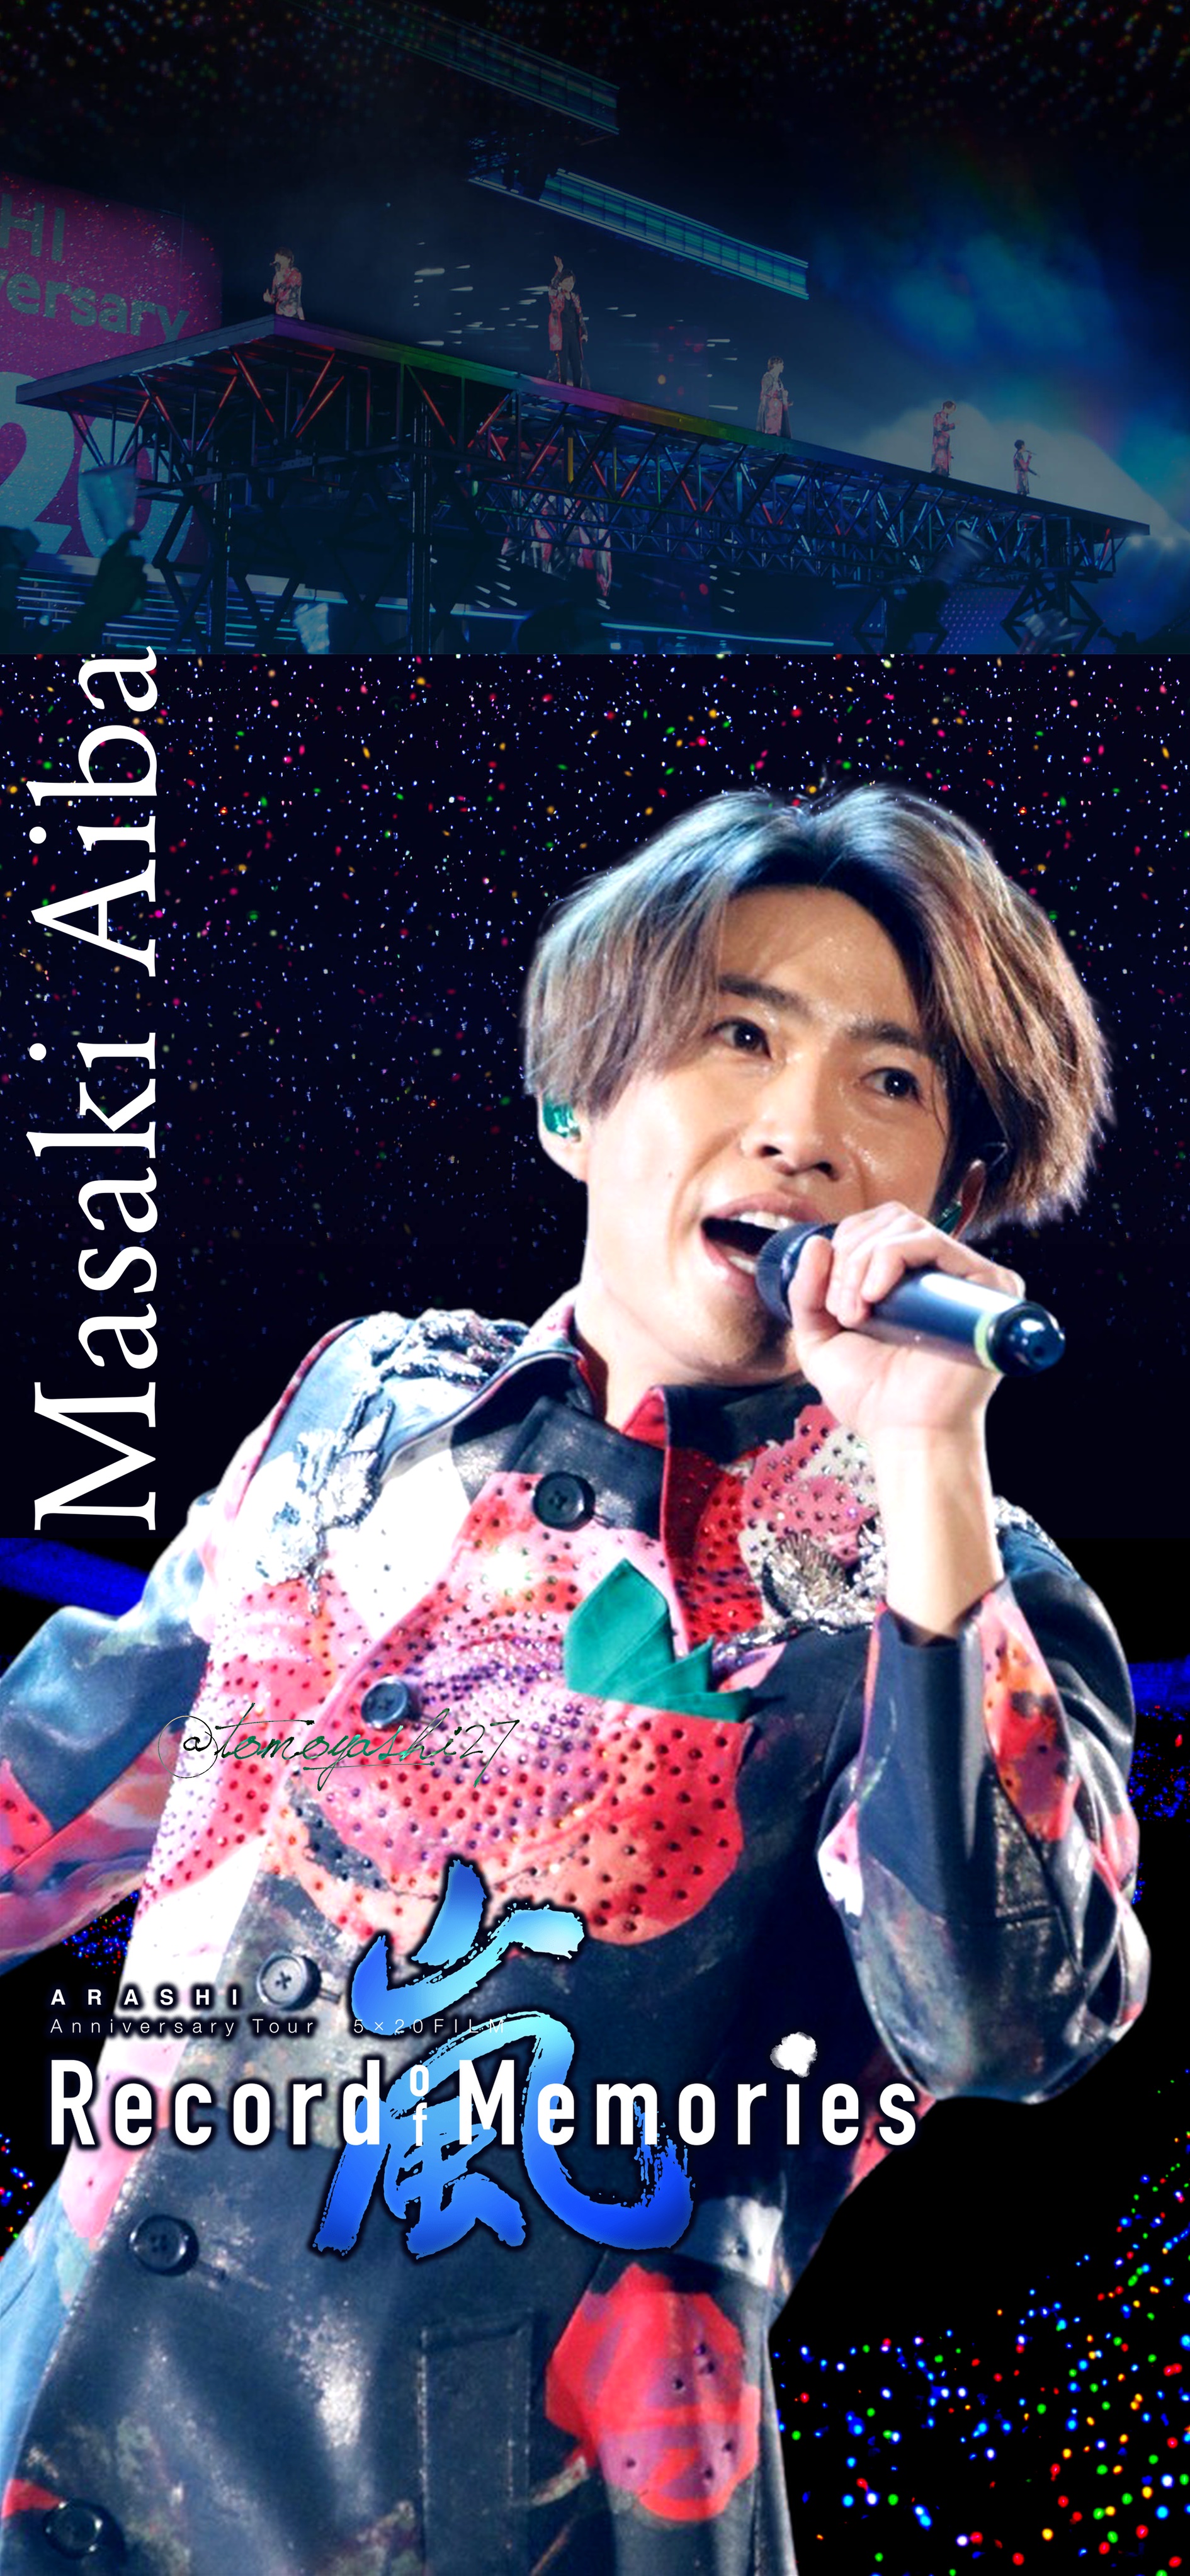 Tomoya Arashi Anniversary Tour 5 Film ロック画面 いよいよ公開されましたね 嵐 Arashi 5xfilm Recordofmemories 大野智 櫻井翔 相葉雅紀 T Co 1qpmf5r5jv Twitter